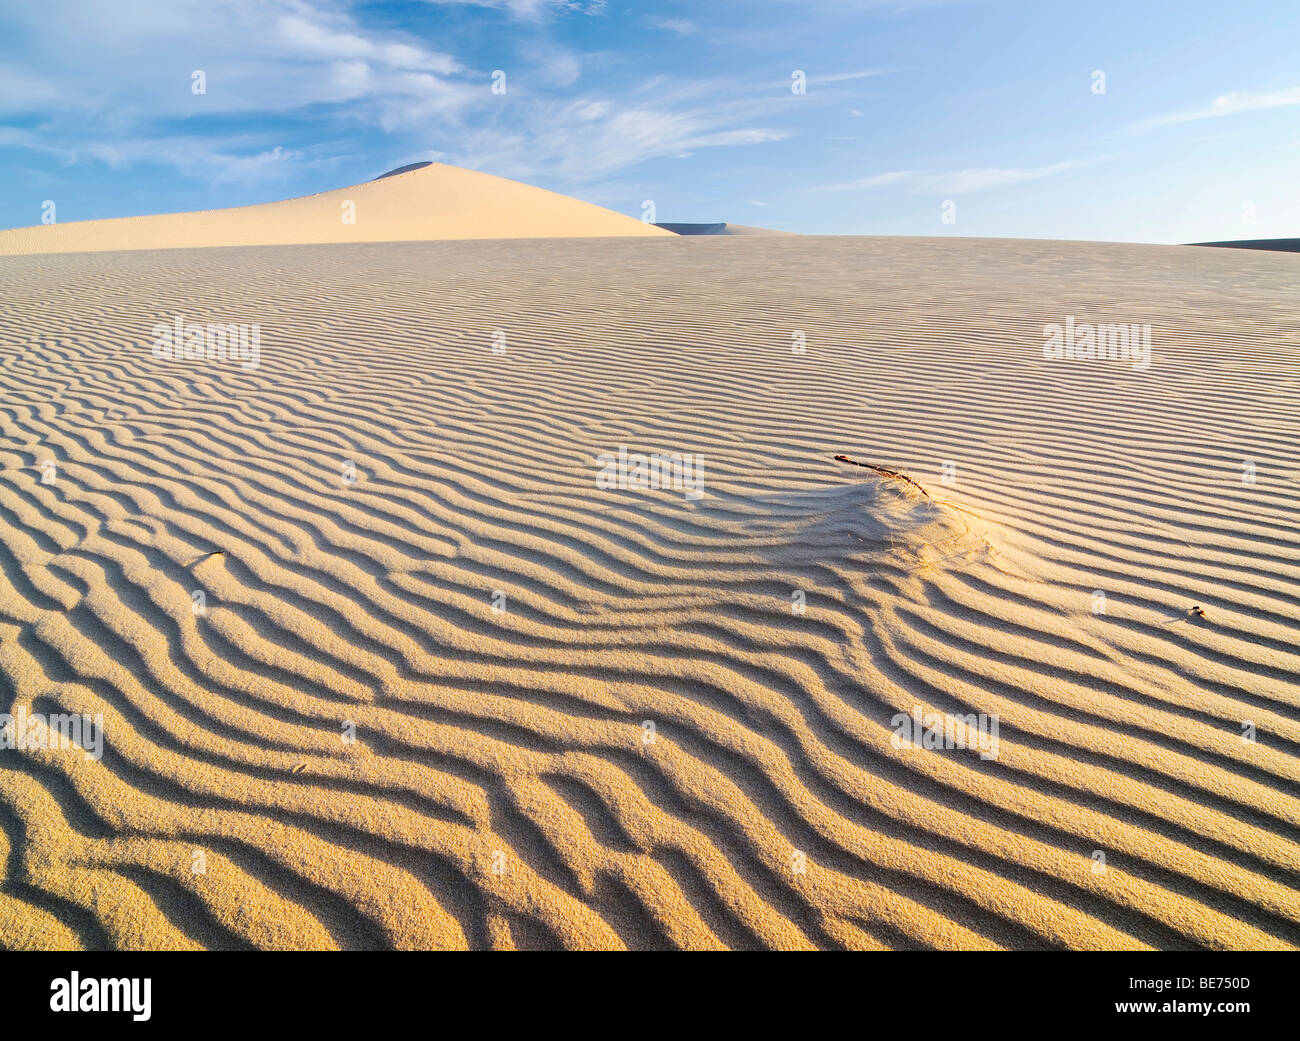 Paisaje desértico y dunas de arena blanca, Bau Ba "Sahara Vietnamita", Bao Trang, Lago Blanco, Vietnam, Asia Foto de stock